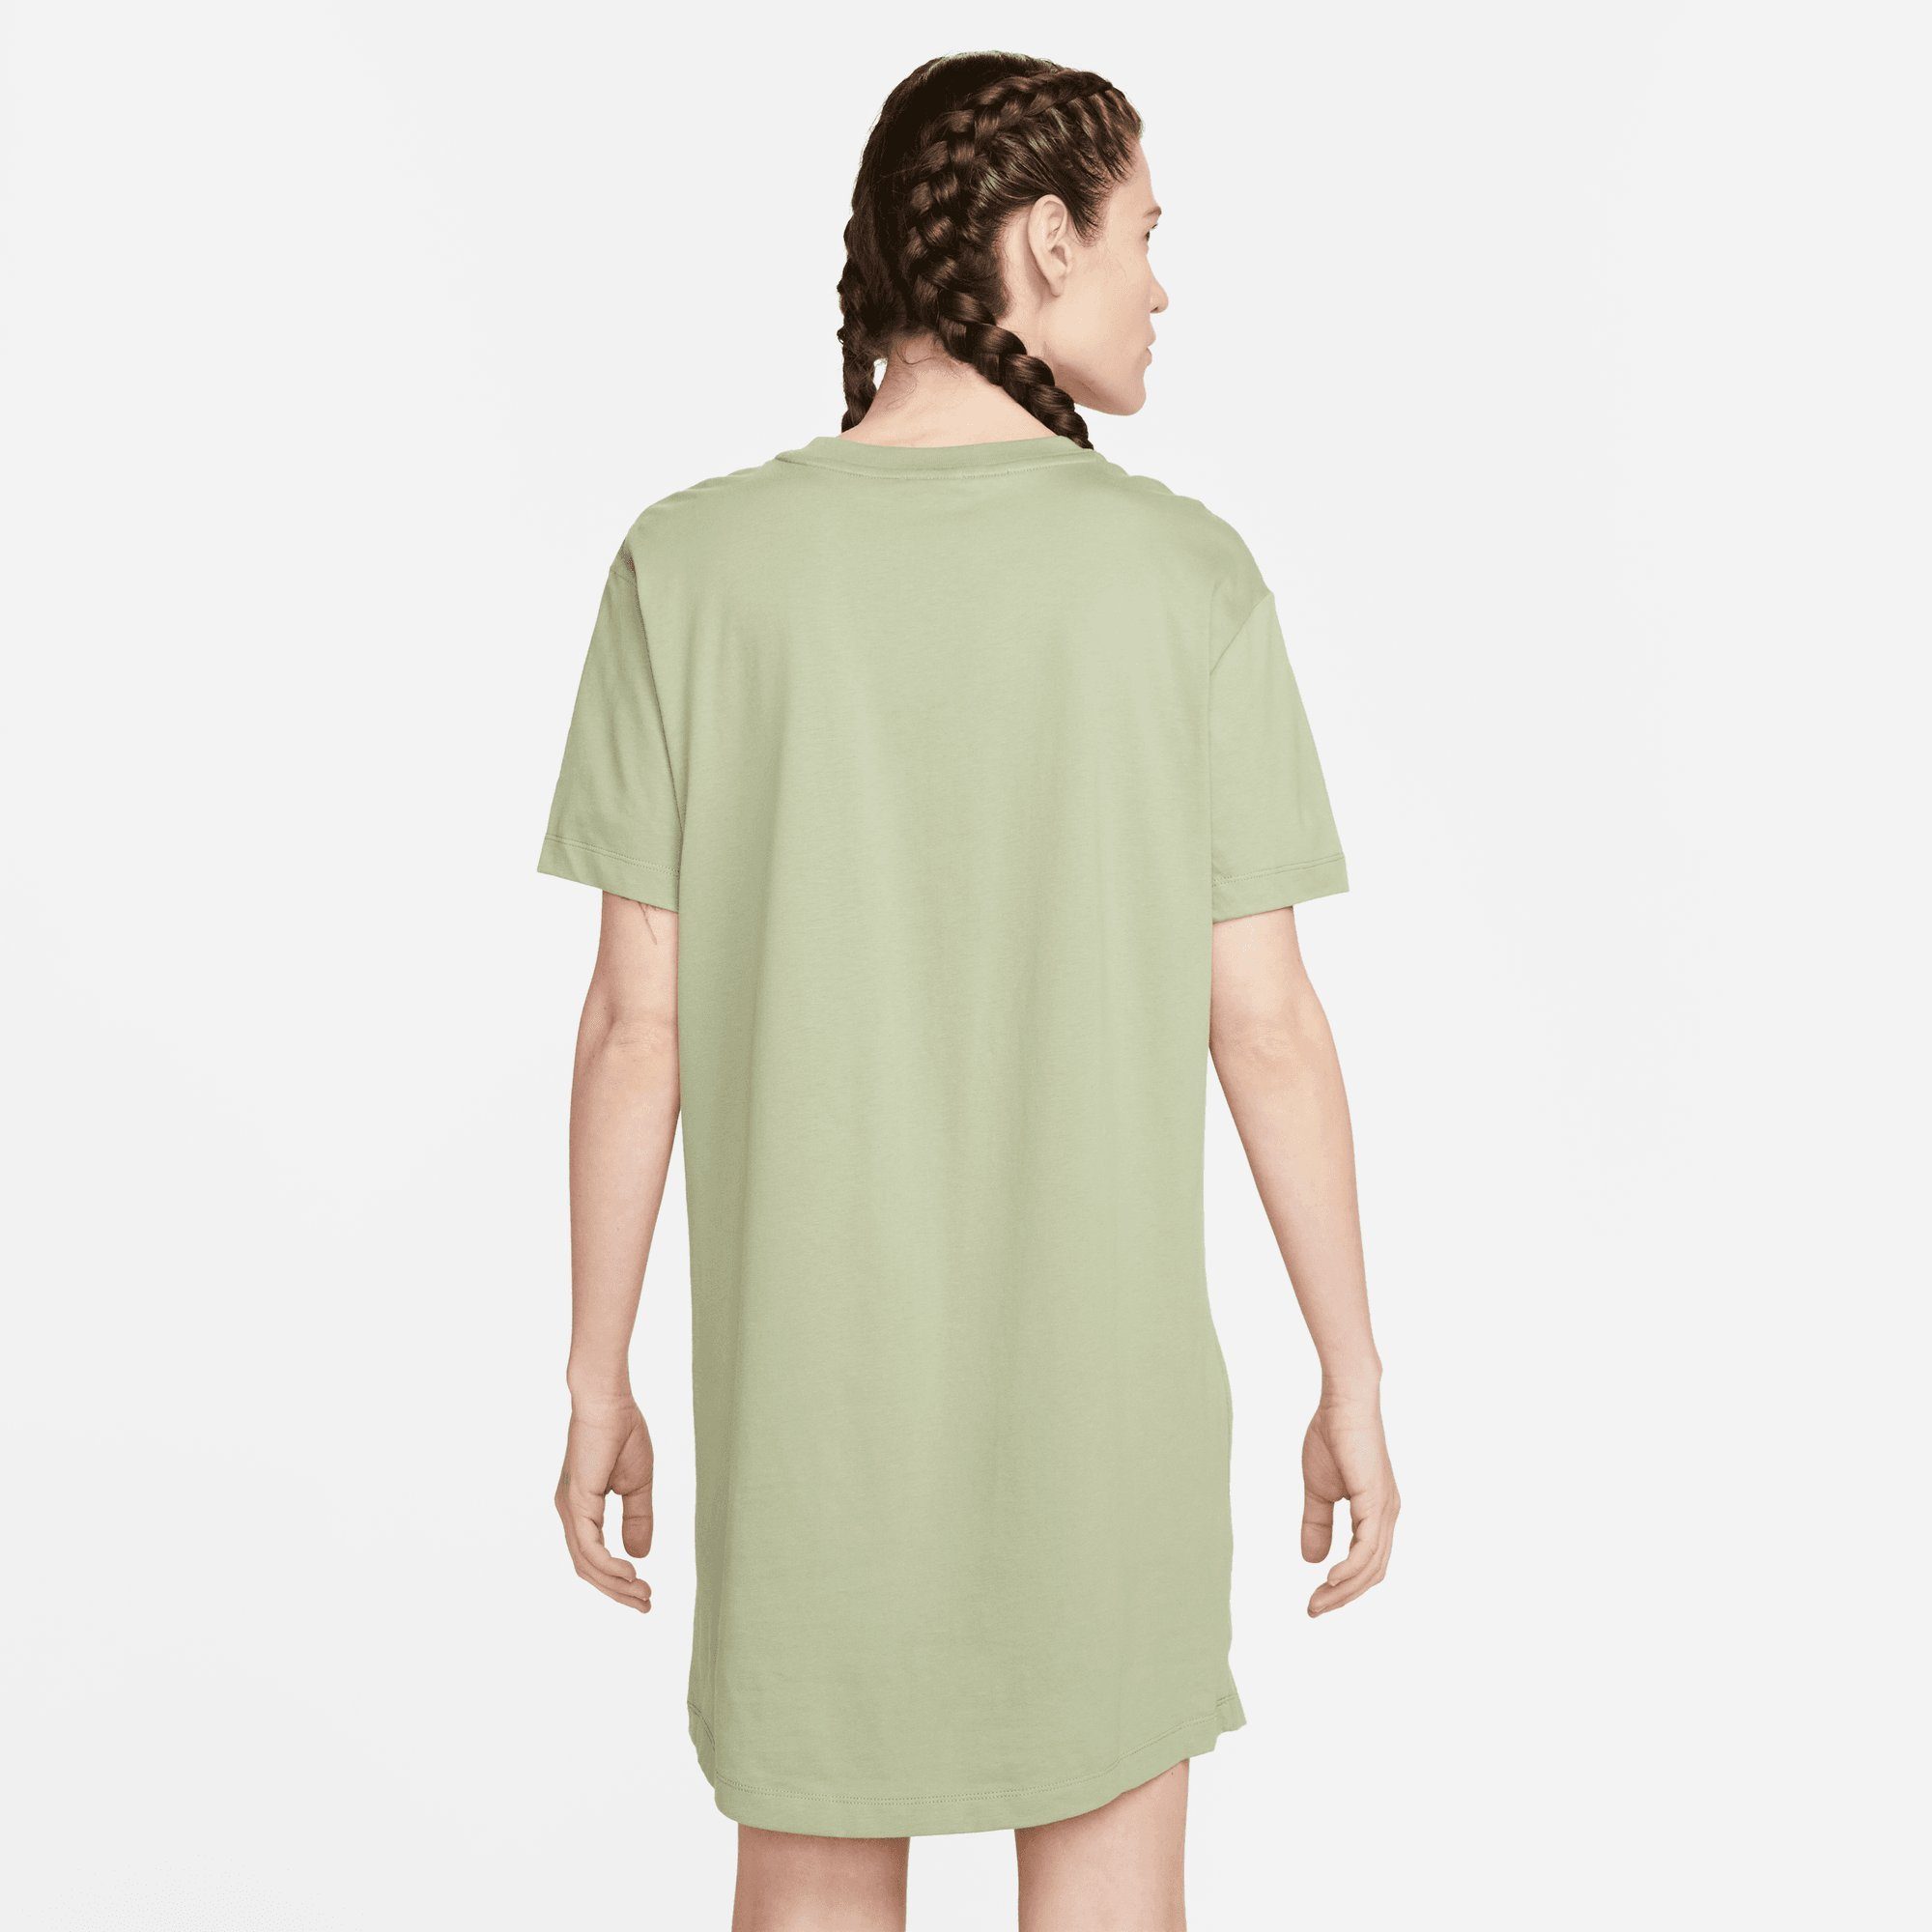 DRESS Nike ESSENTIAL GREEN/BLACK Sportswear WOMEN'S Sommerkleid SHORT-SLEEVE OIL